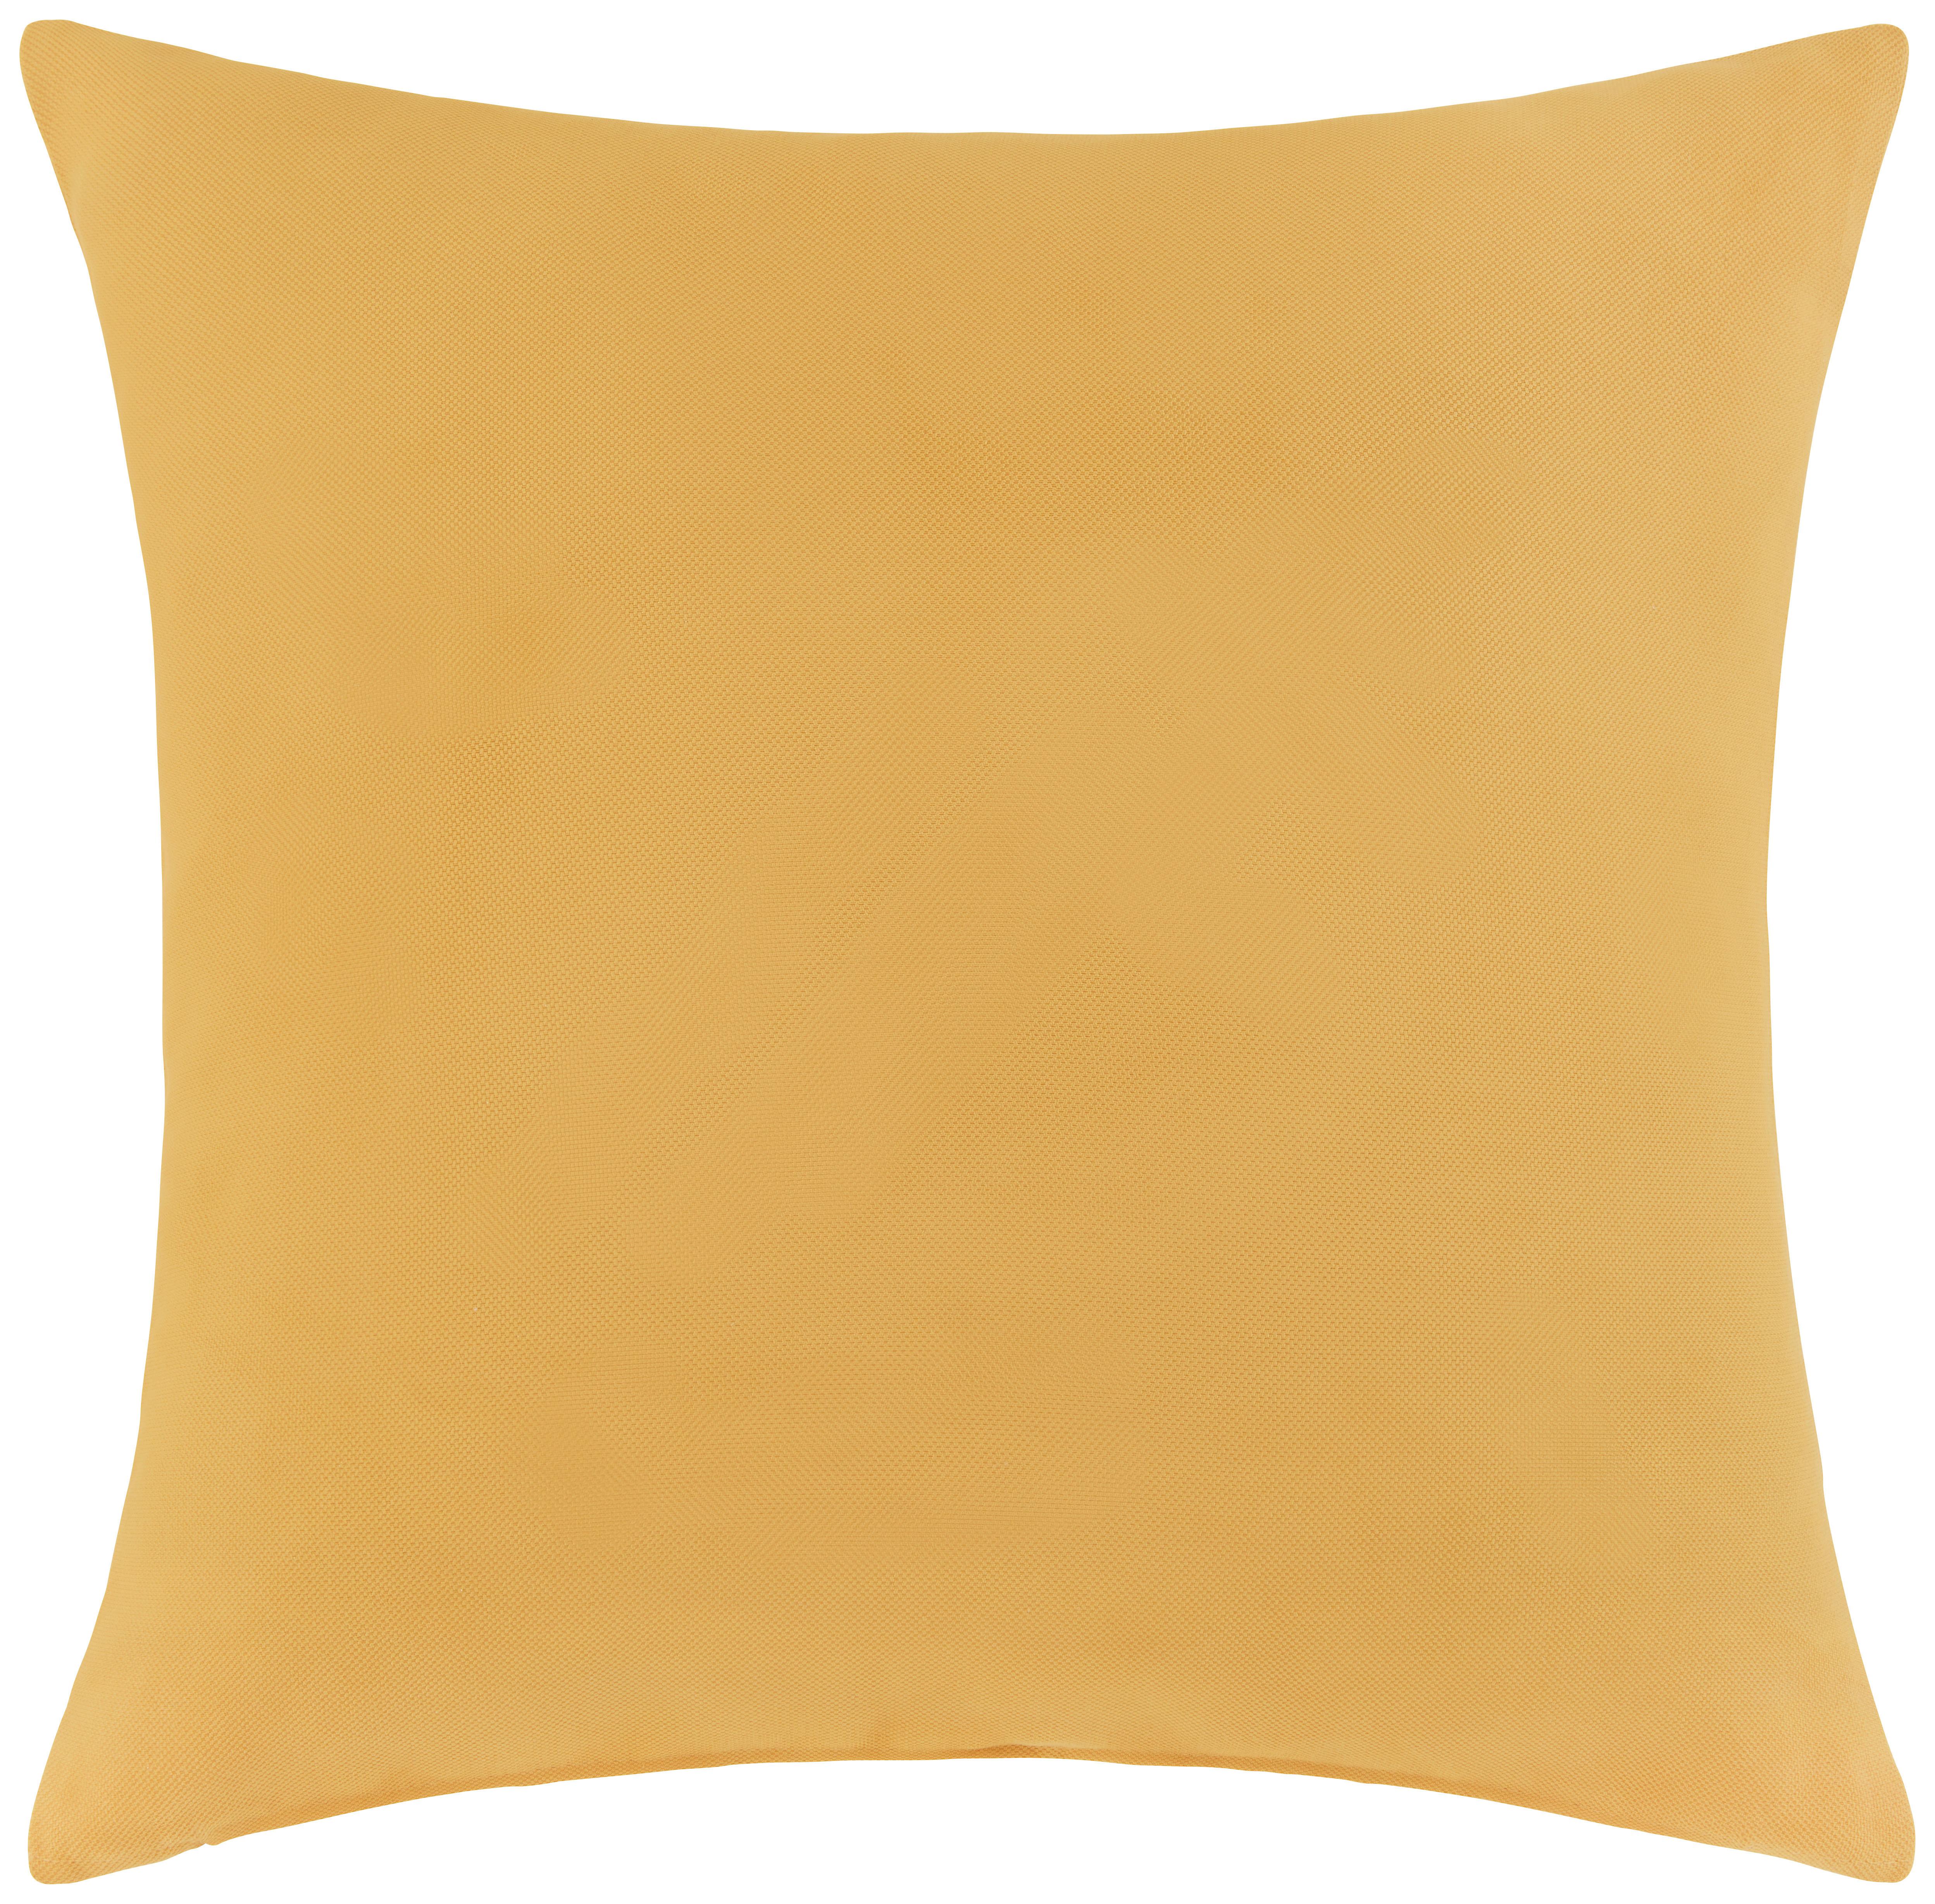 Dekoračný Vankúš Felix, 45/45cm, Žltá - žltá, Konvenčný, textil (45/45cm) - Modern Living